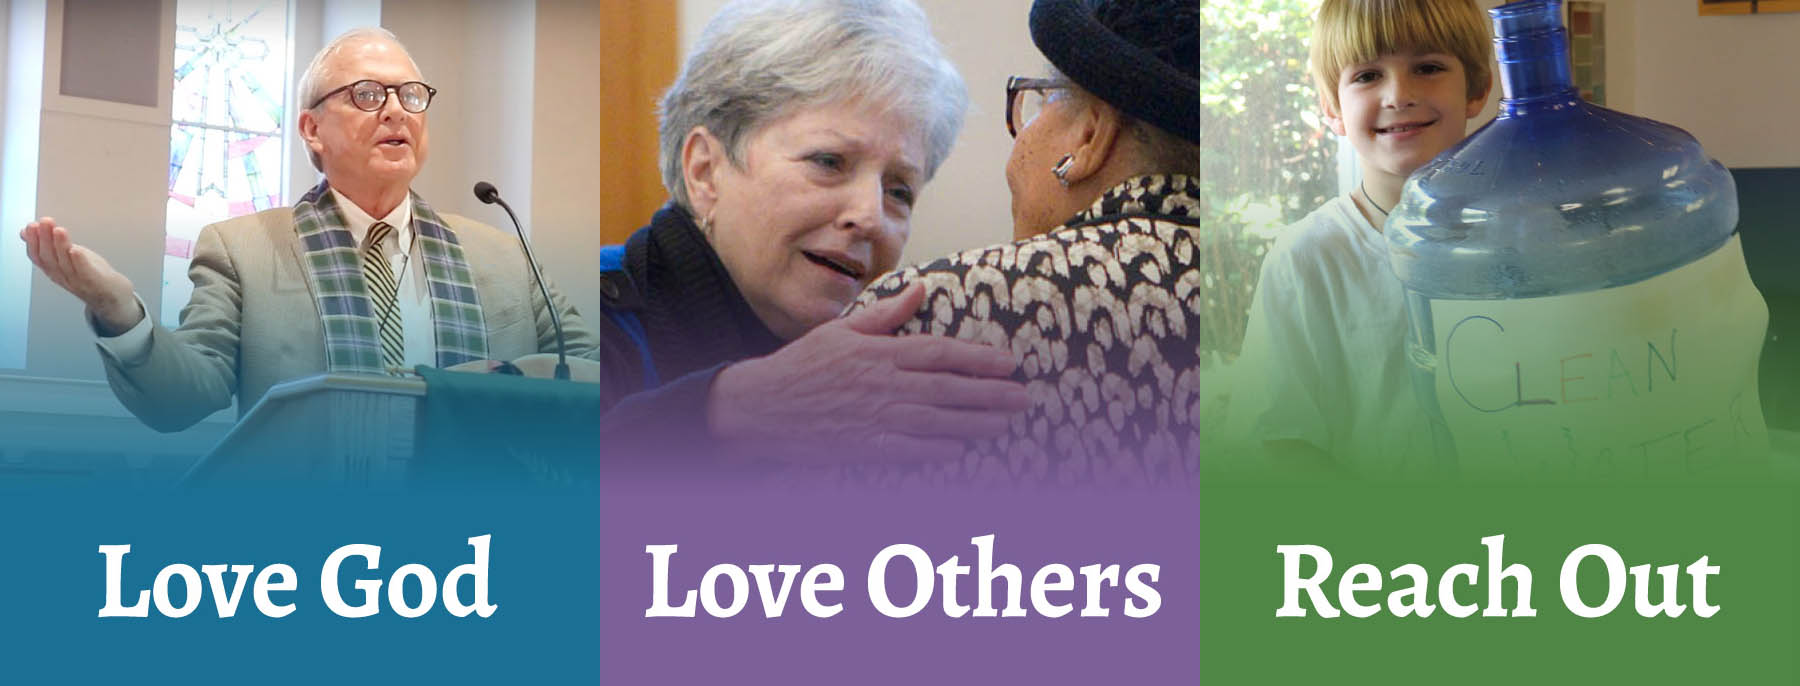 Sea Island Presbyterian Church image for Love God Love Others Reach Out